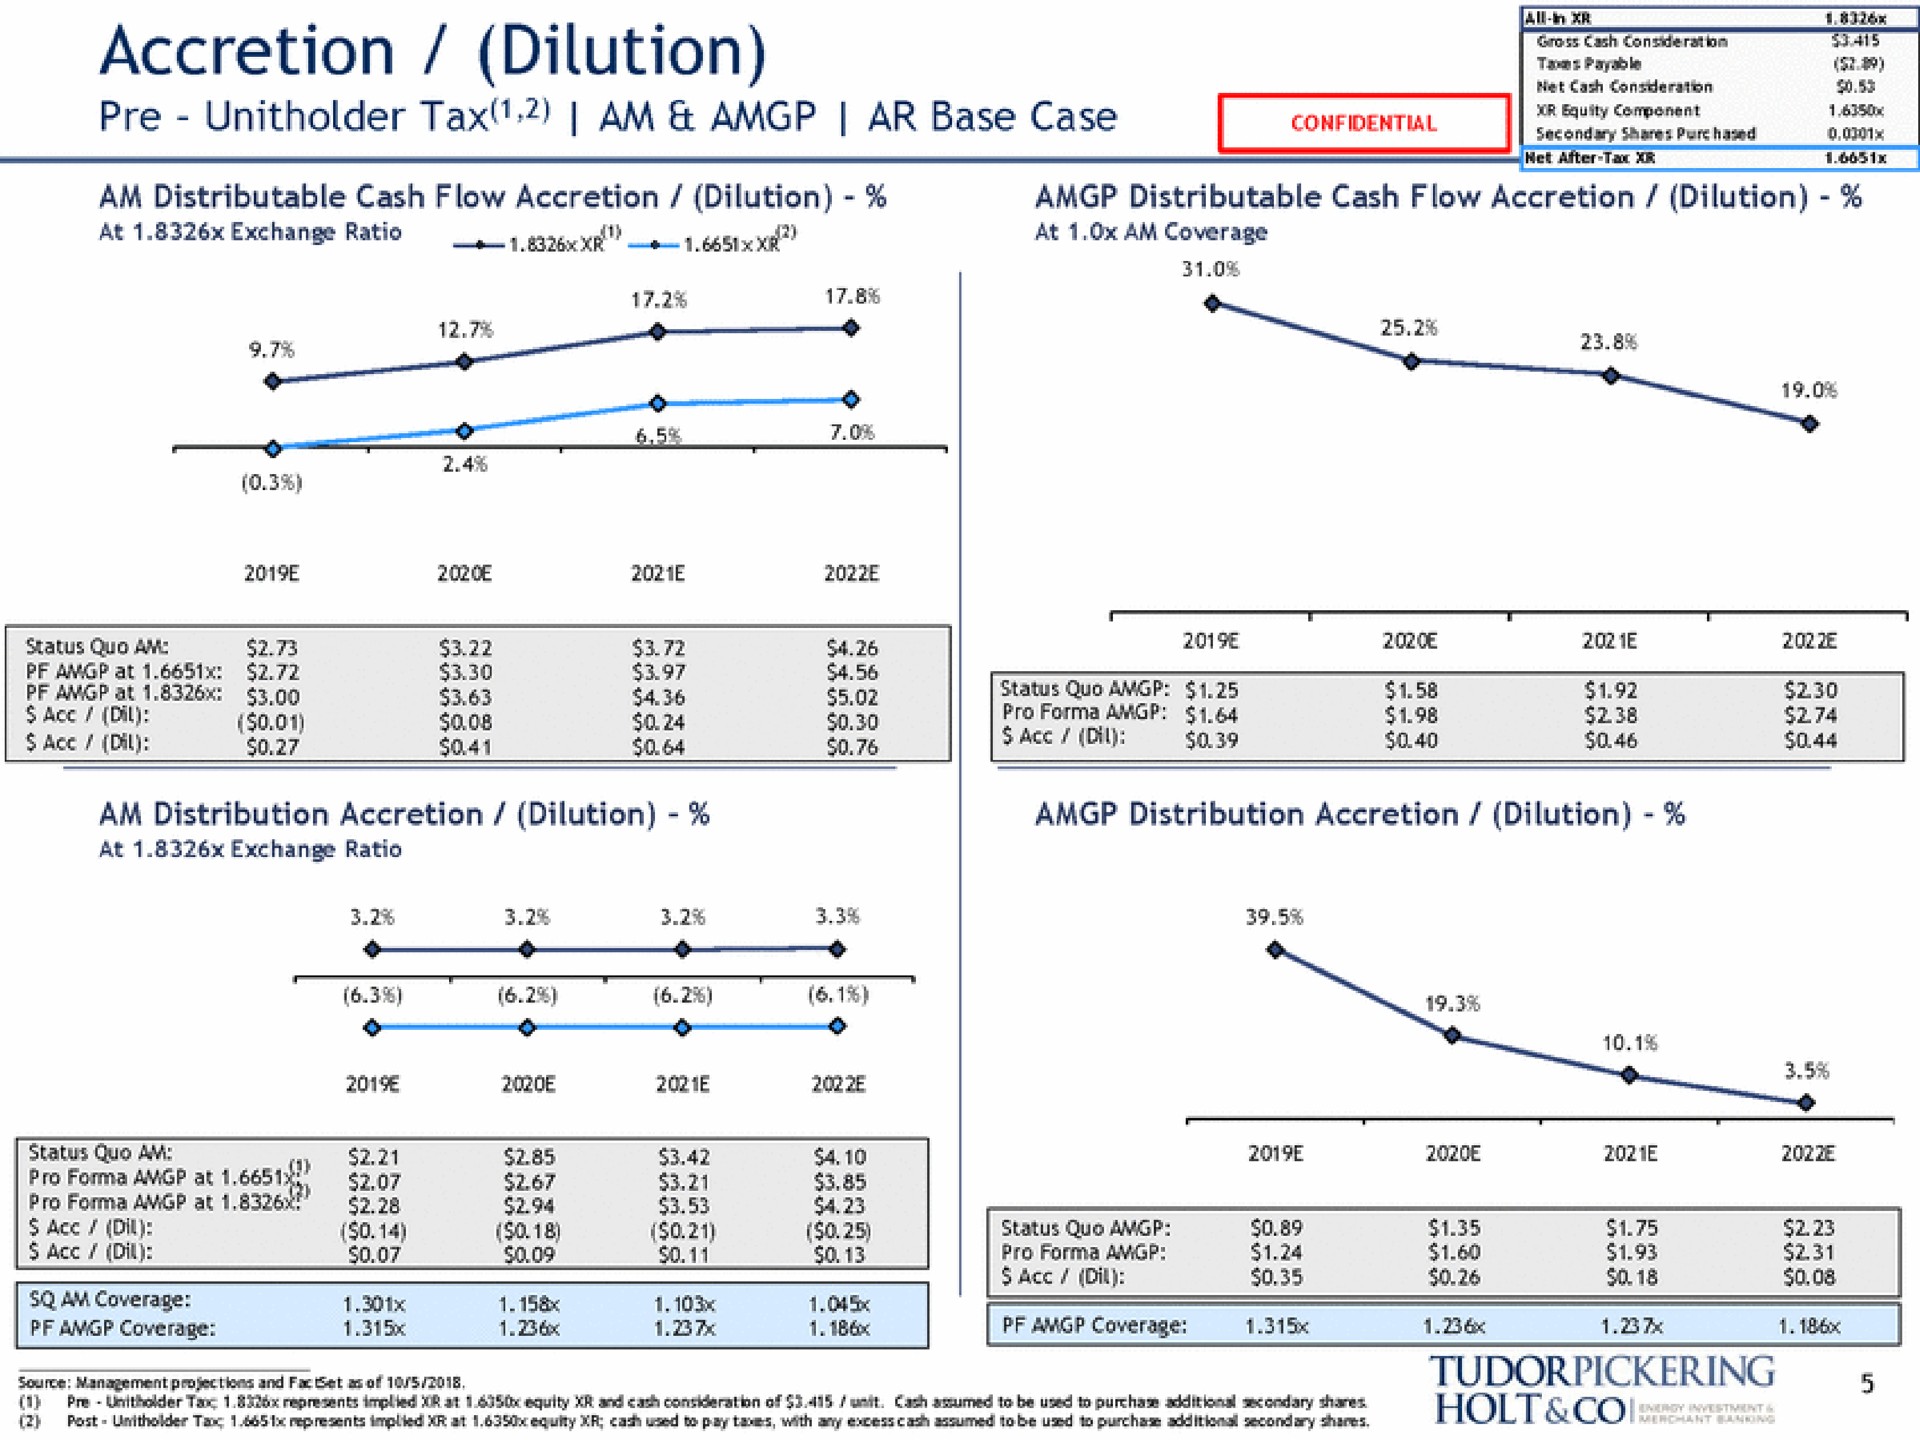 accretion dilution tax am base case | Tudor, Pickering, Holt & Co